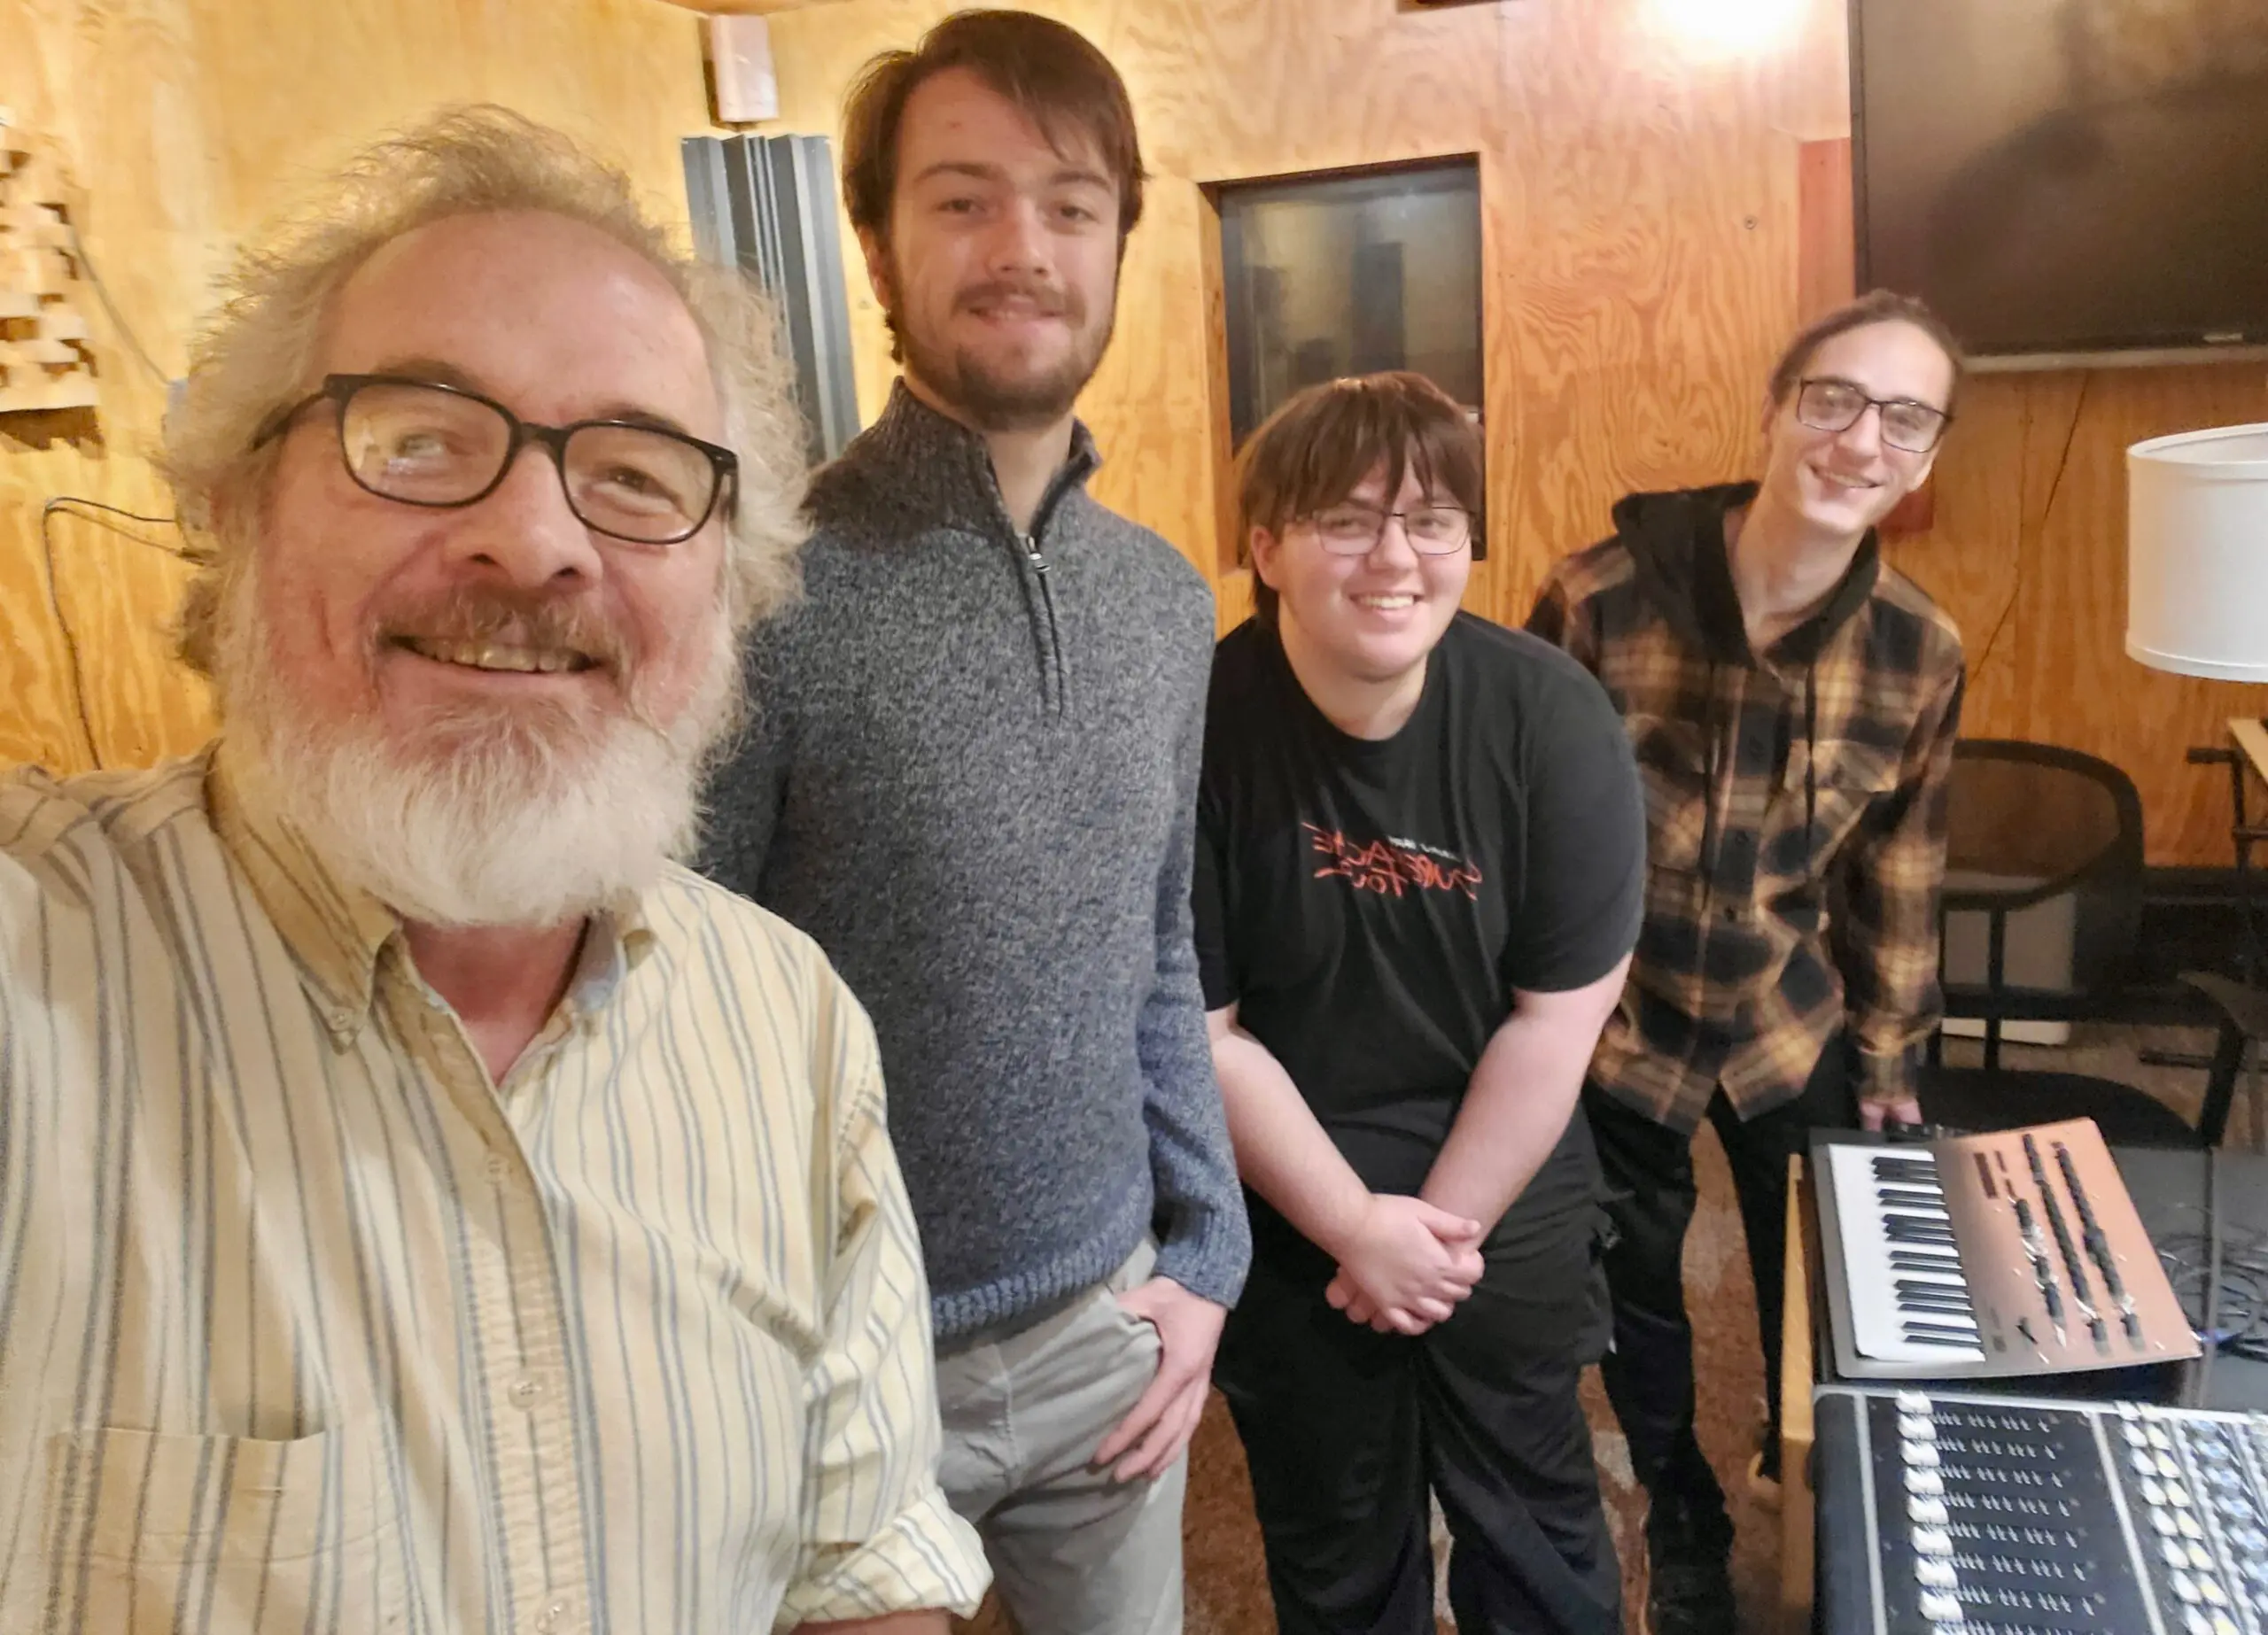 SUNY Oneonta Audio Arts Interns Ethan, Em, and Michael